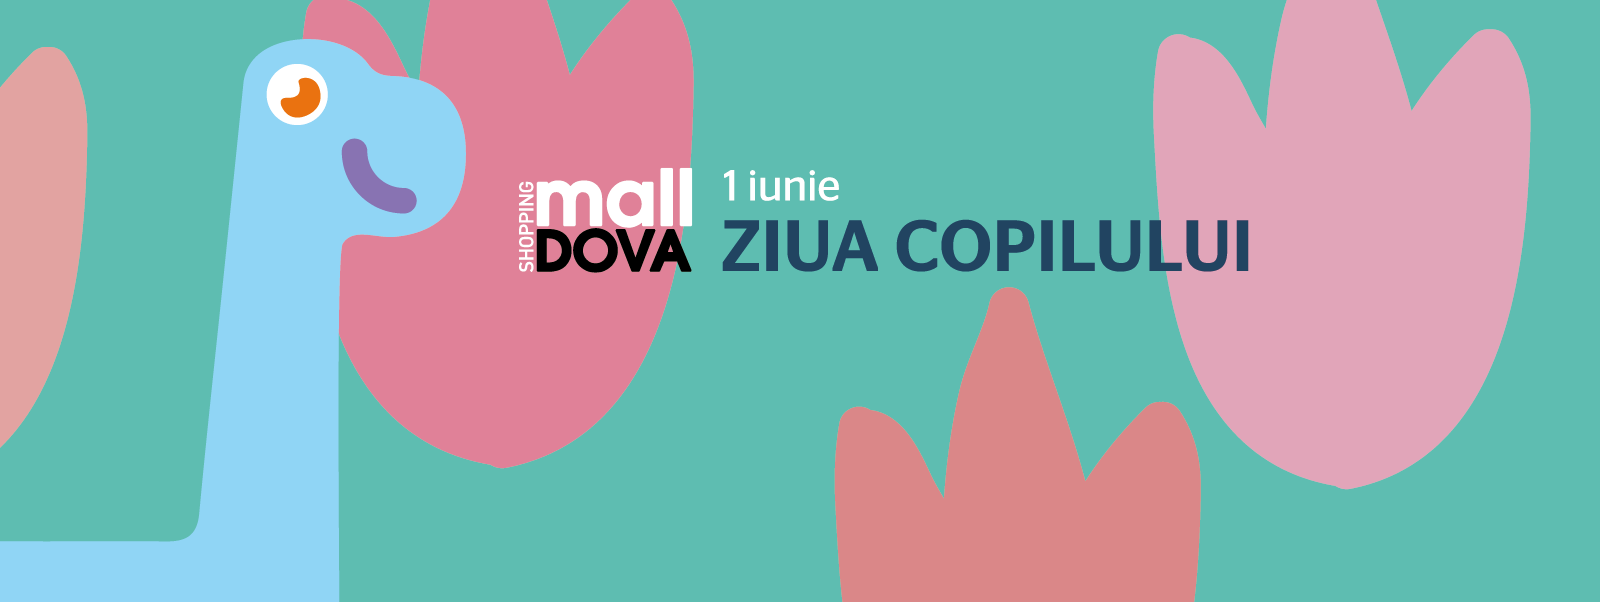 De 1 iunie sărbătorim copilăria la Shopping MallDova!